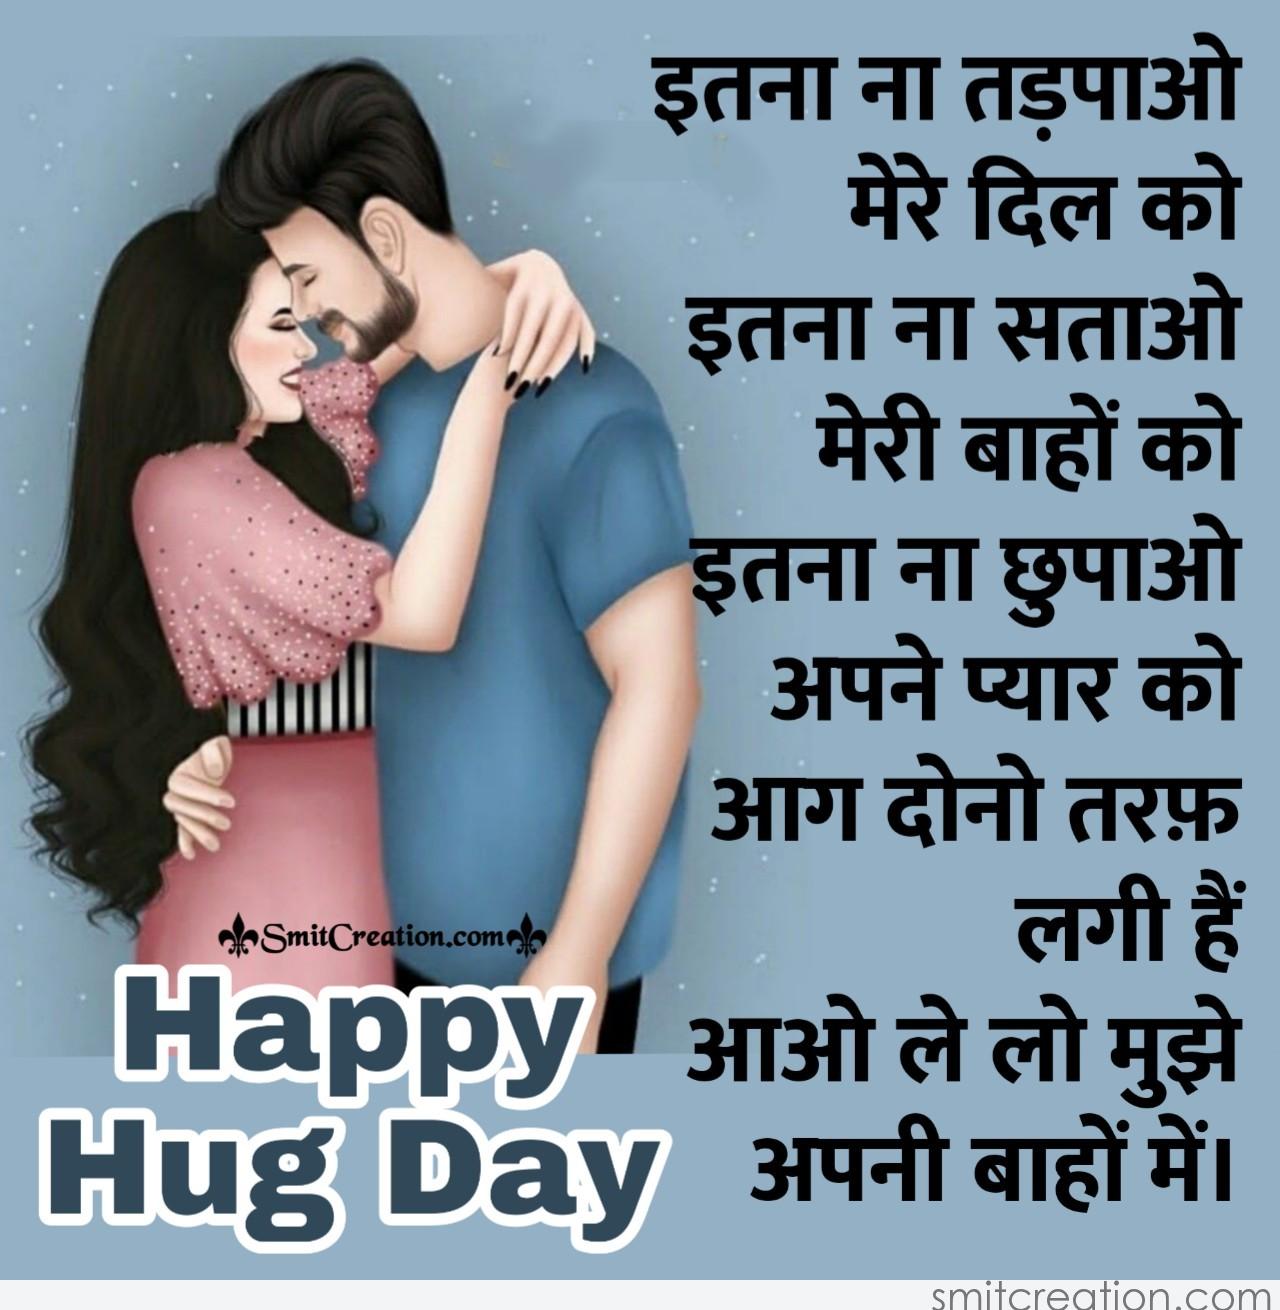 Hug Day Hindi Shayari - SmitCreation.com